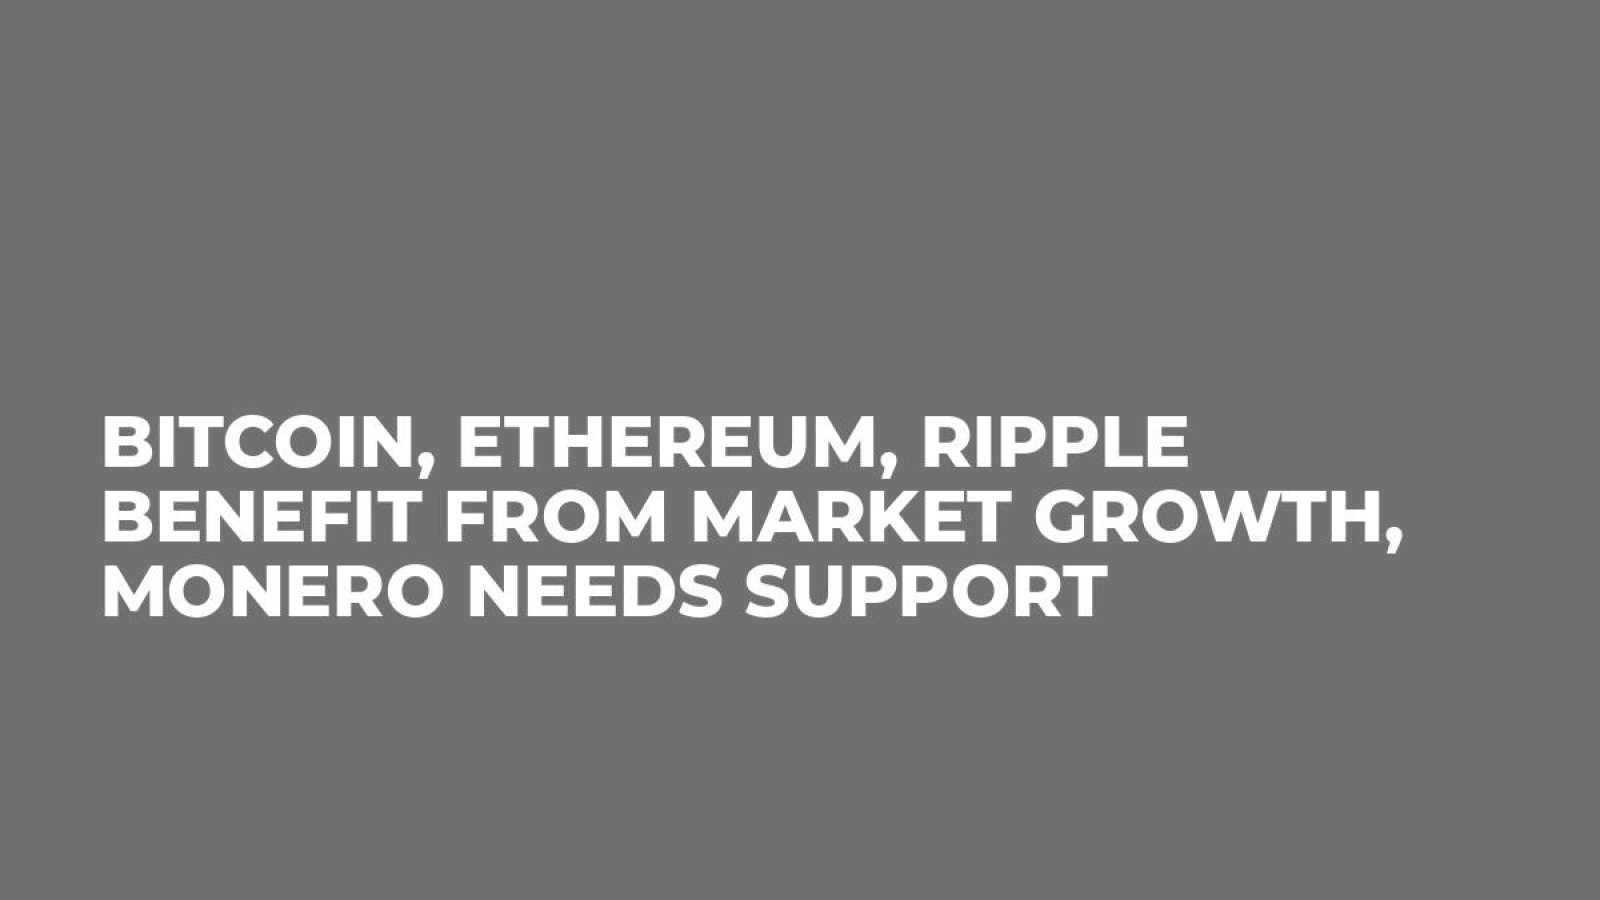 Bitcoin, Ethereum, Ripple Benefit From Market Growth, Monero Needs Support